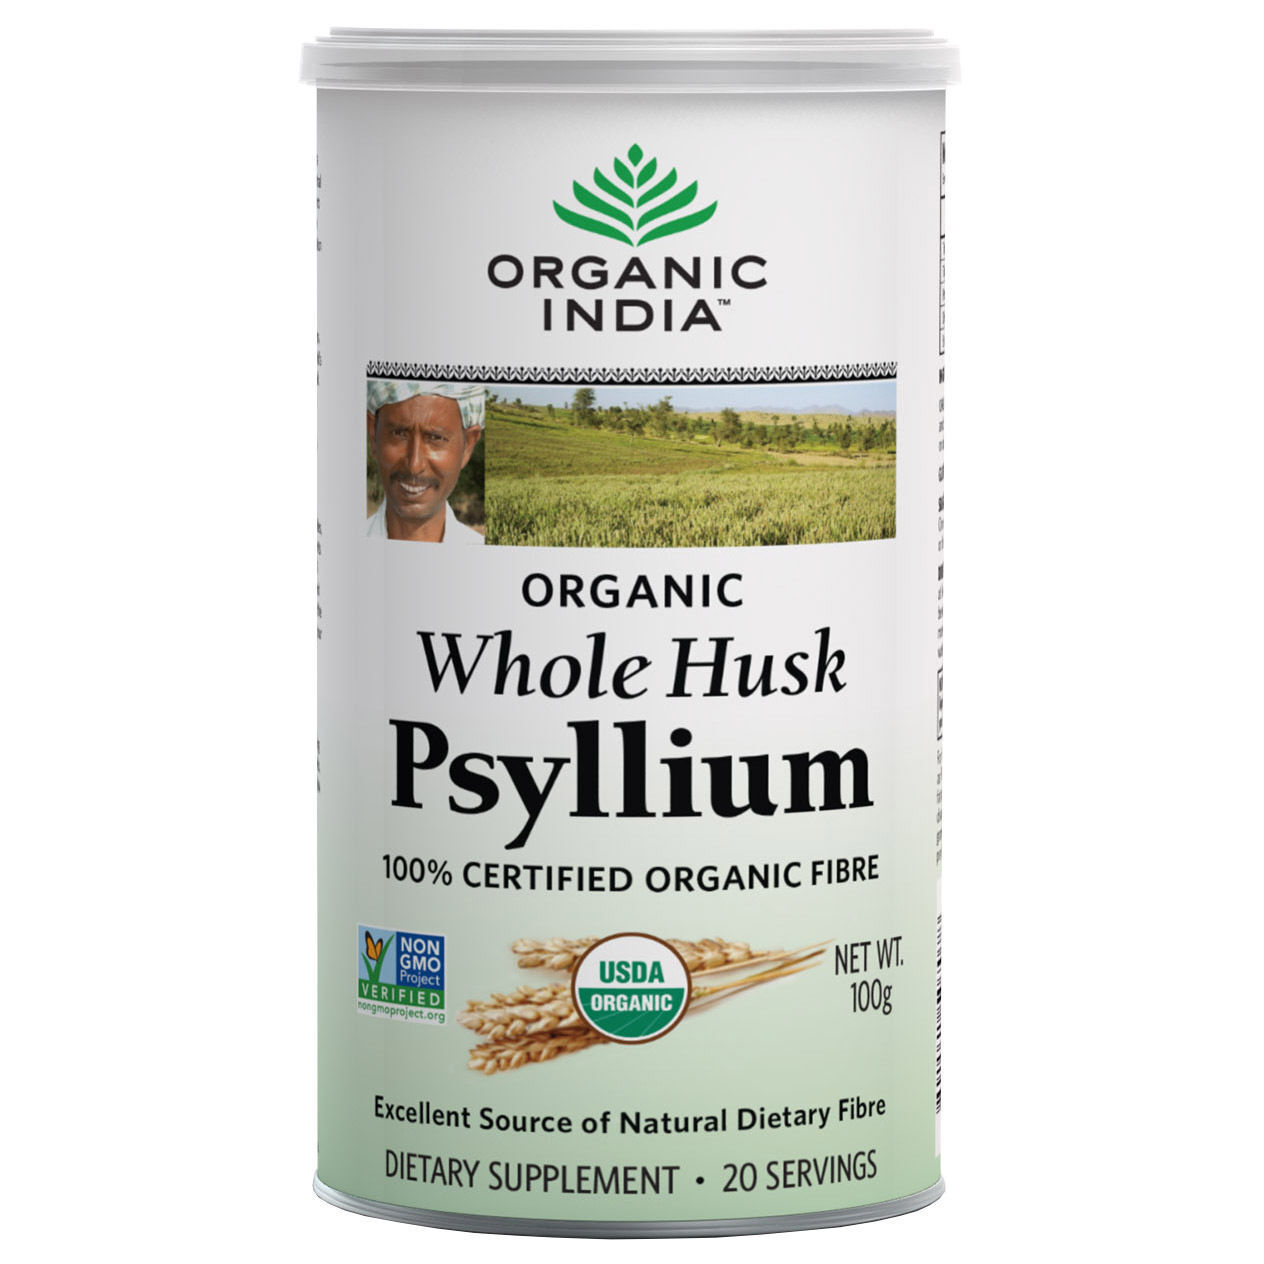 Organic India Whole Husk Psyllium 100gm Cannister Organic Dietary Fiber USDA